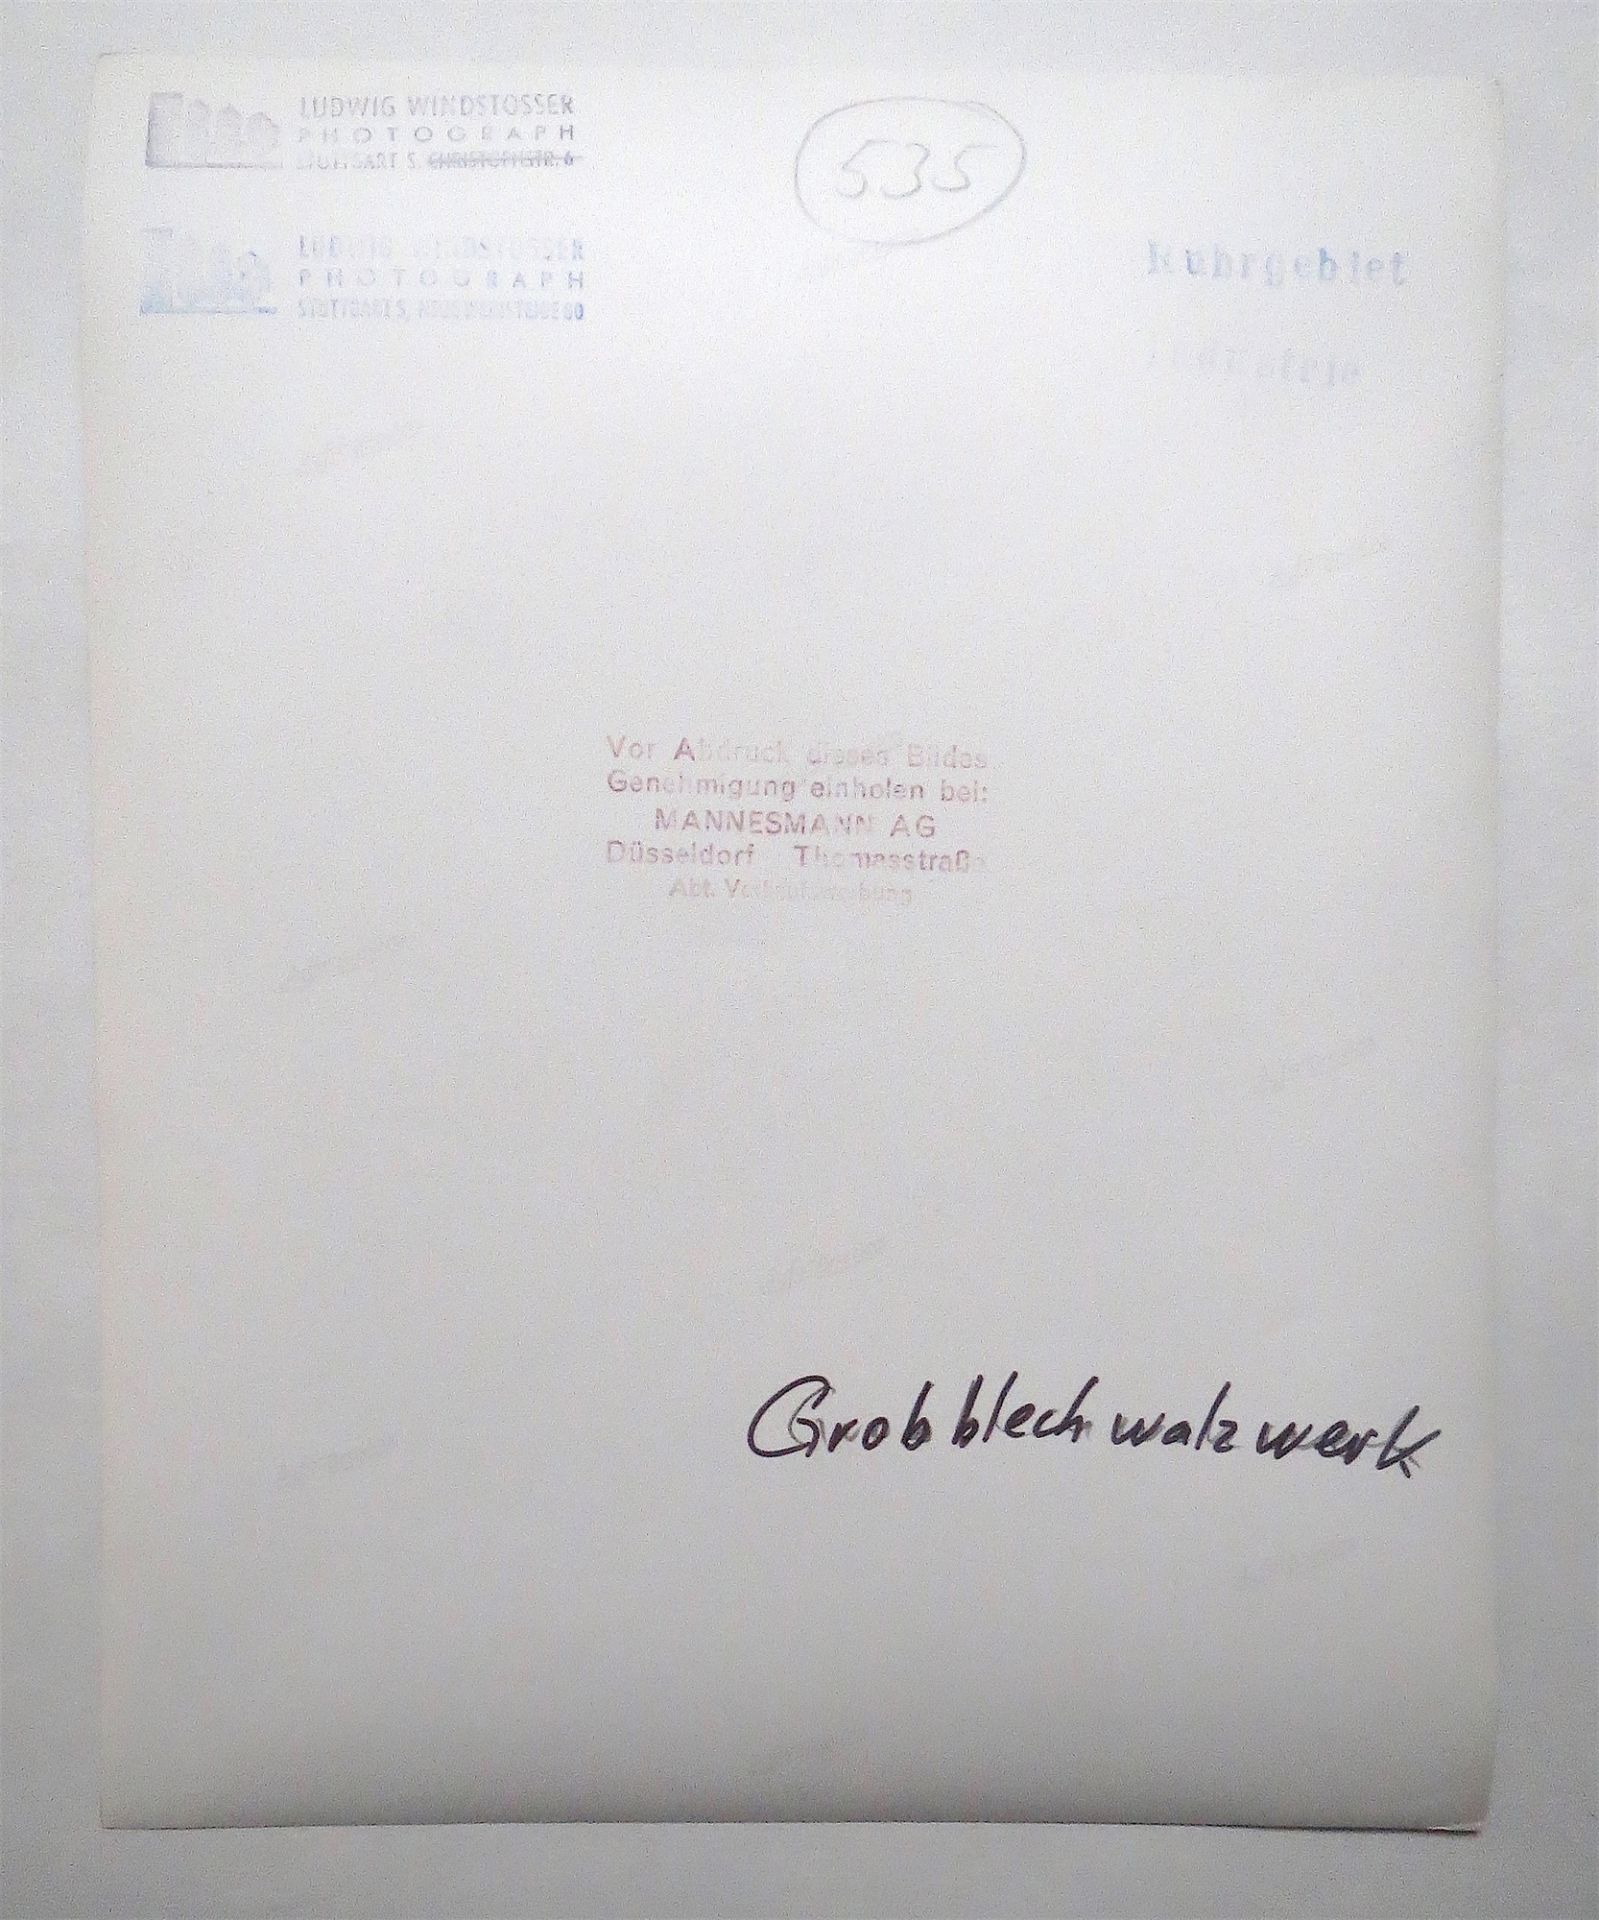 Ludwig Windstosser. ”Grobblechwalzwerk”, Mannesmann, Duisburg. 1955 - Image 2 of 4